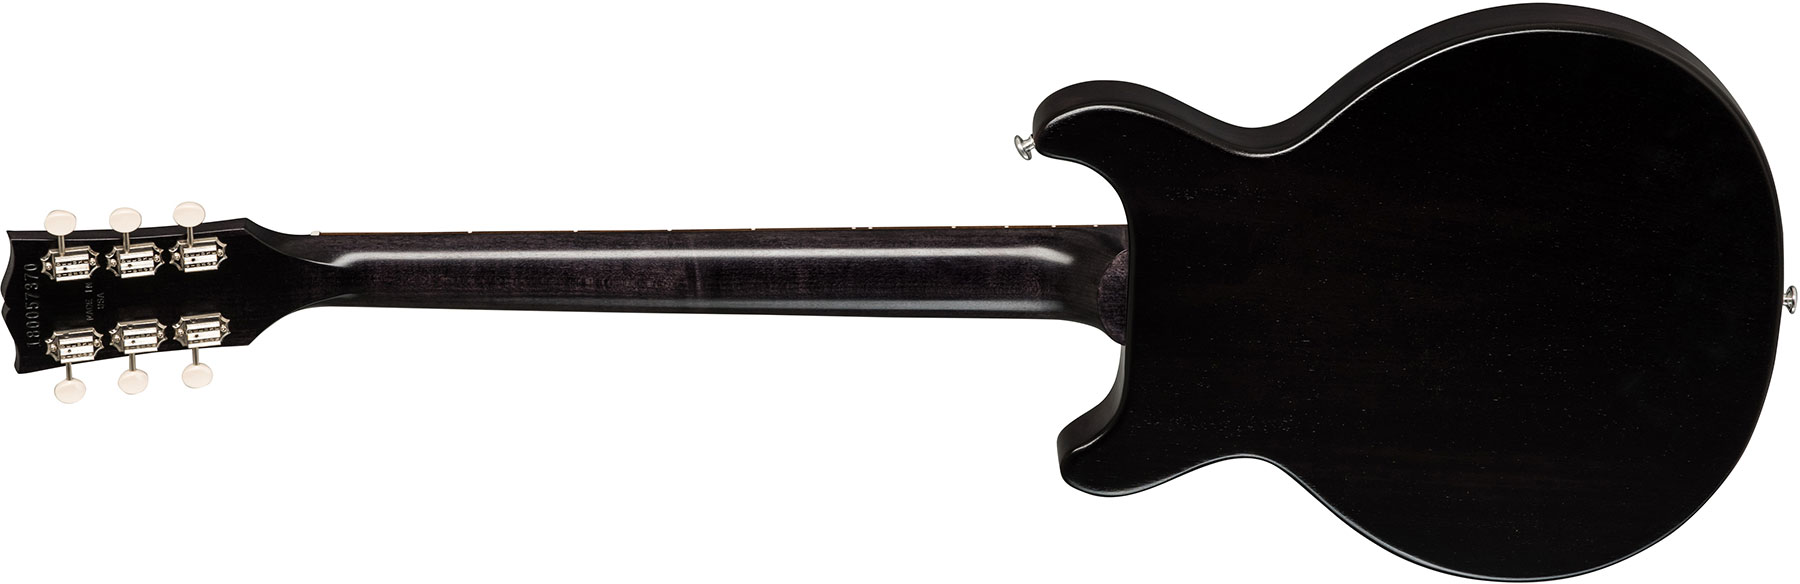 Gibson Les Paul Junior Dc Tribute 2019 P90 Ht Rw - Worn Ebony - Guitarra eléctrica de corte único. - Variation 2